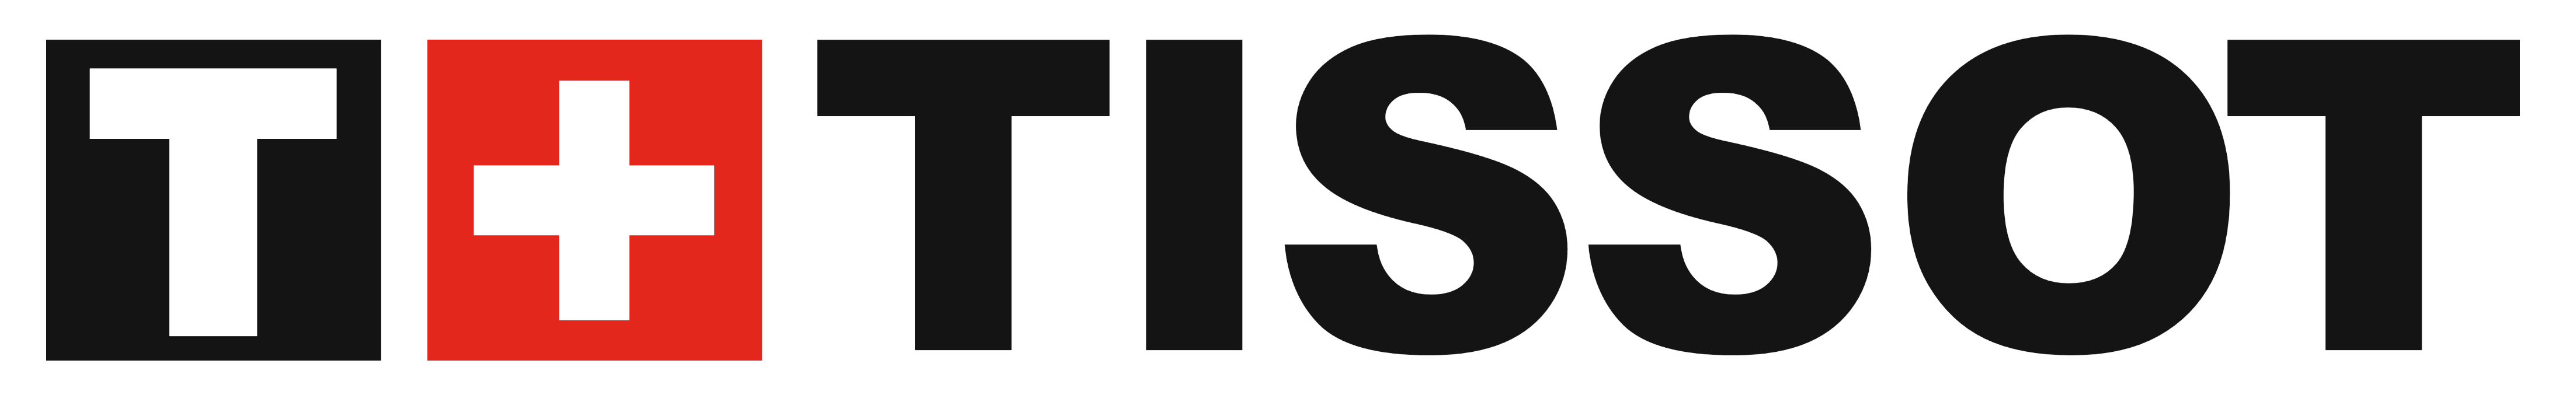 Tissot logo, logotype